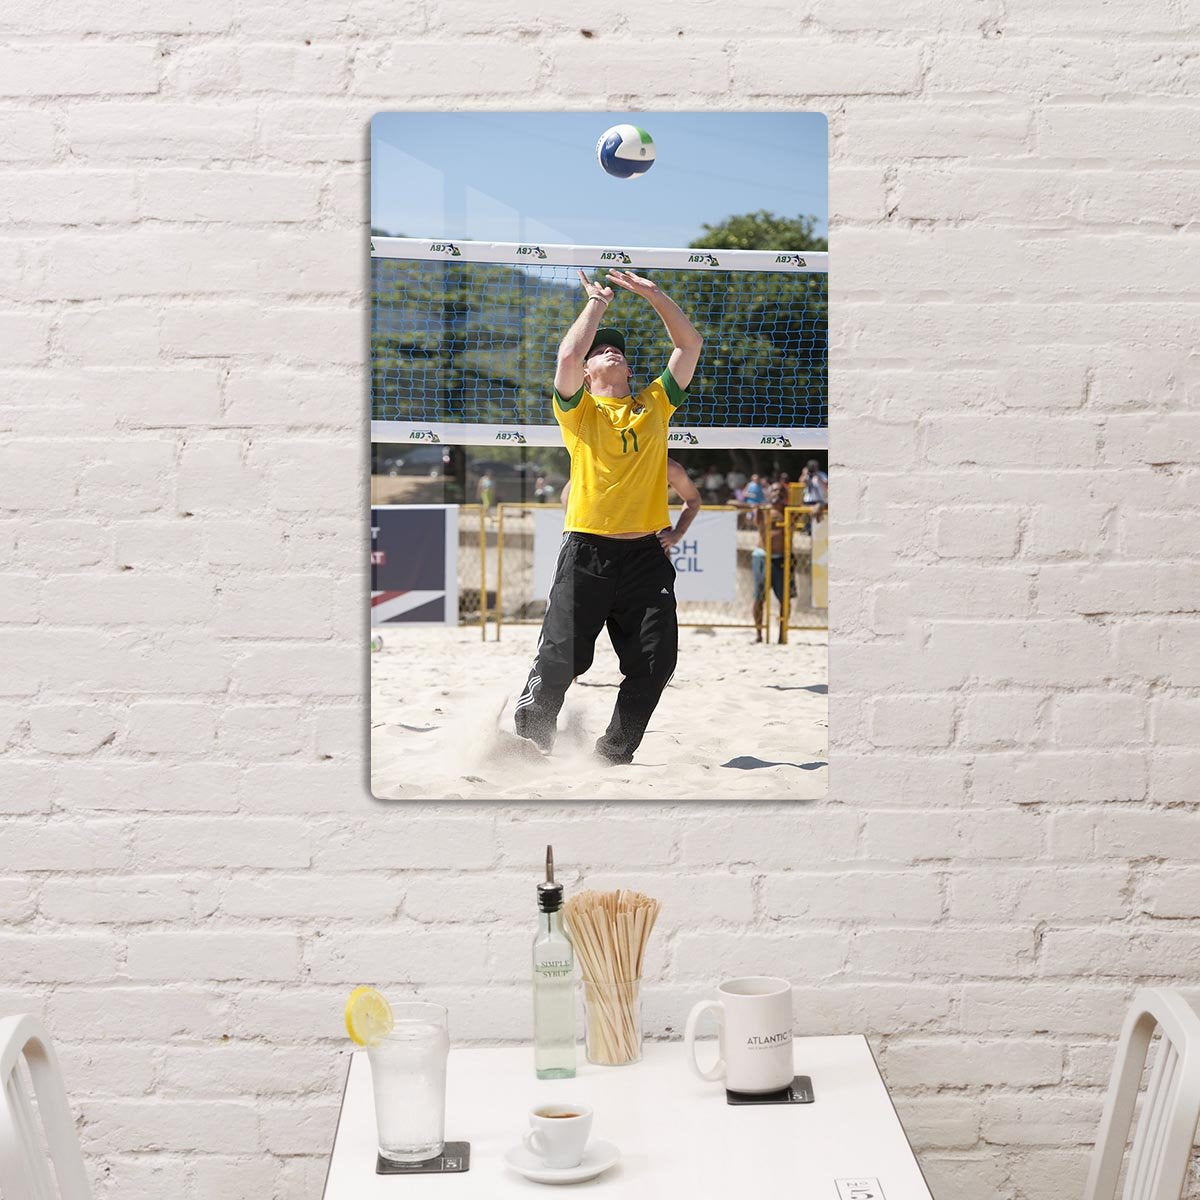 Prince Harry playing volleyball in Rio De Janeiro Brazil HD Metal Print